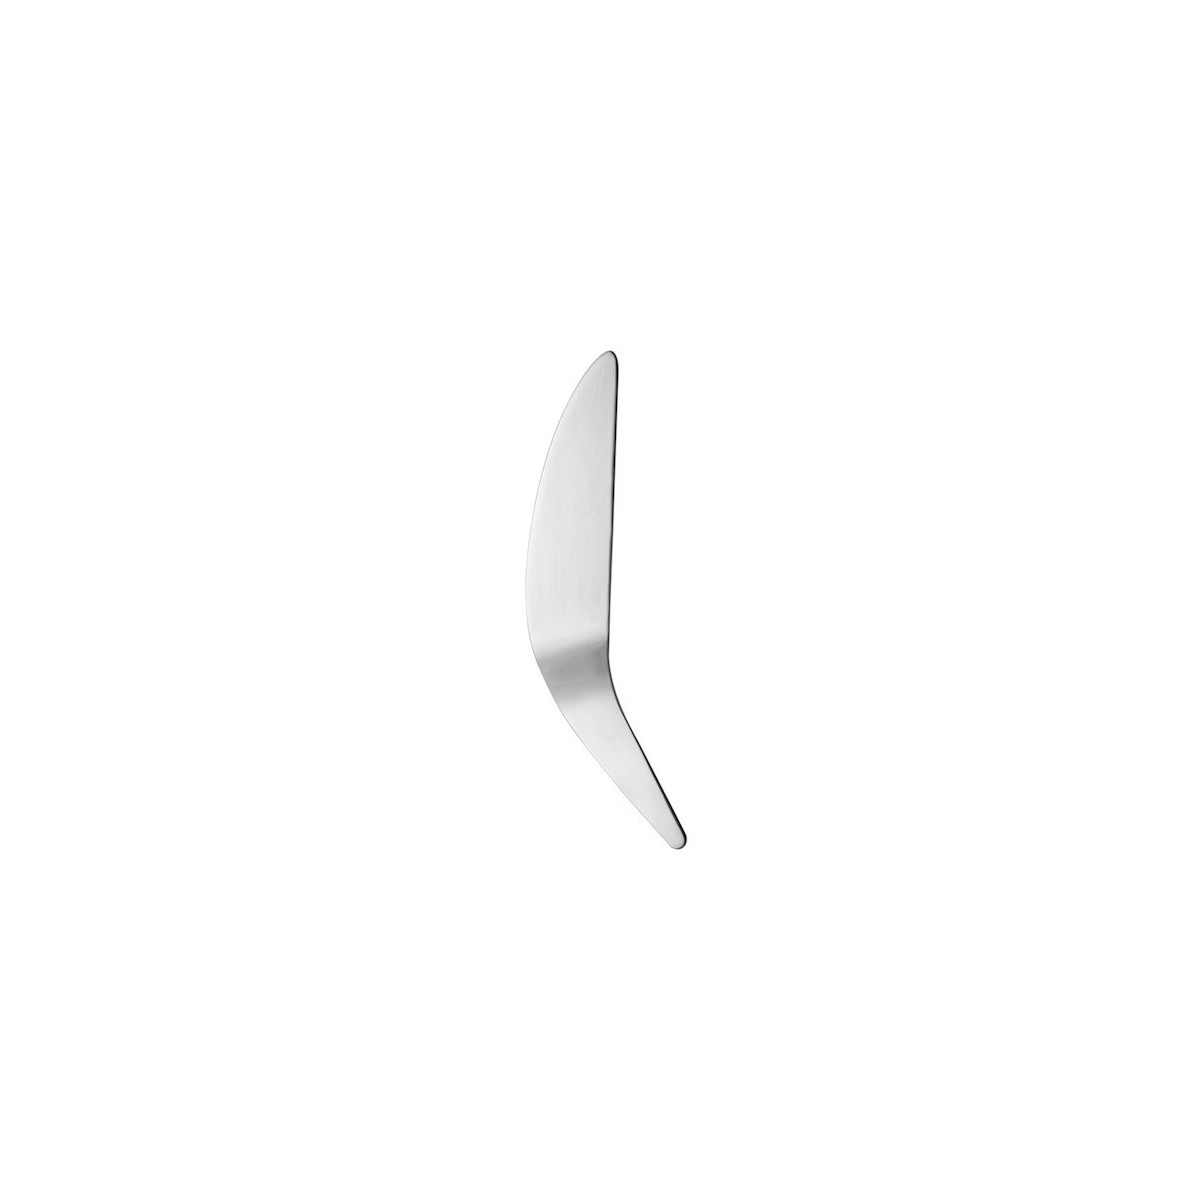 pie server - Arne Jacobsen cutlery